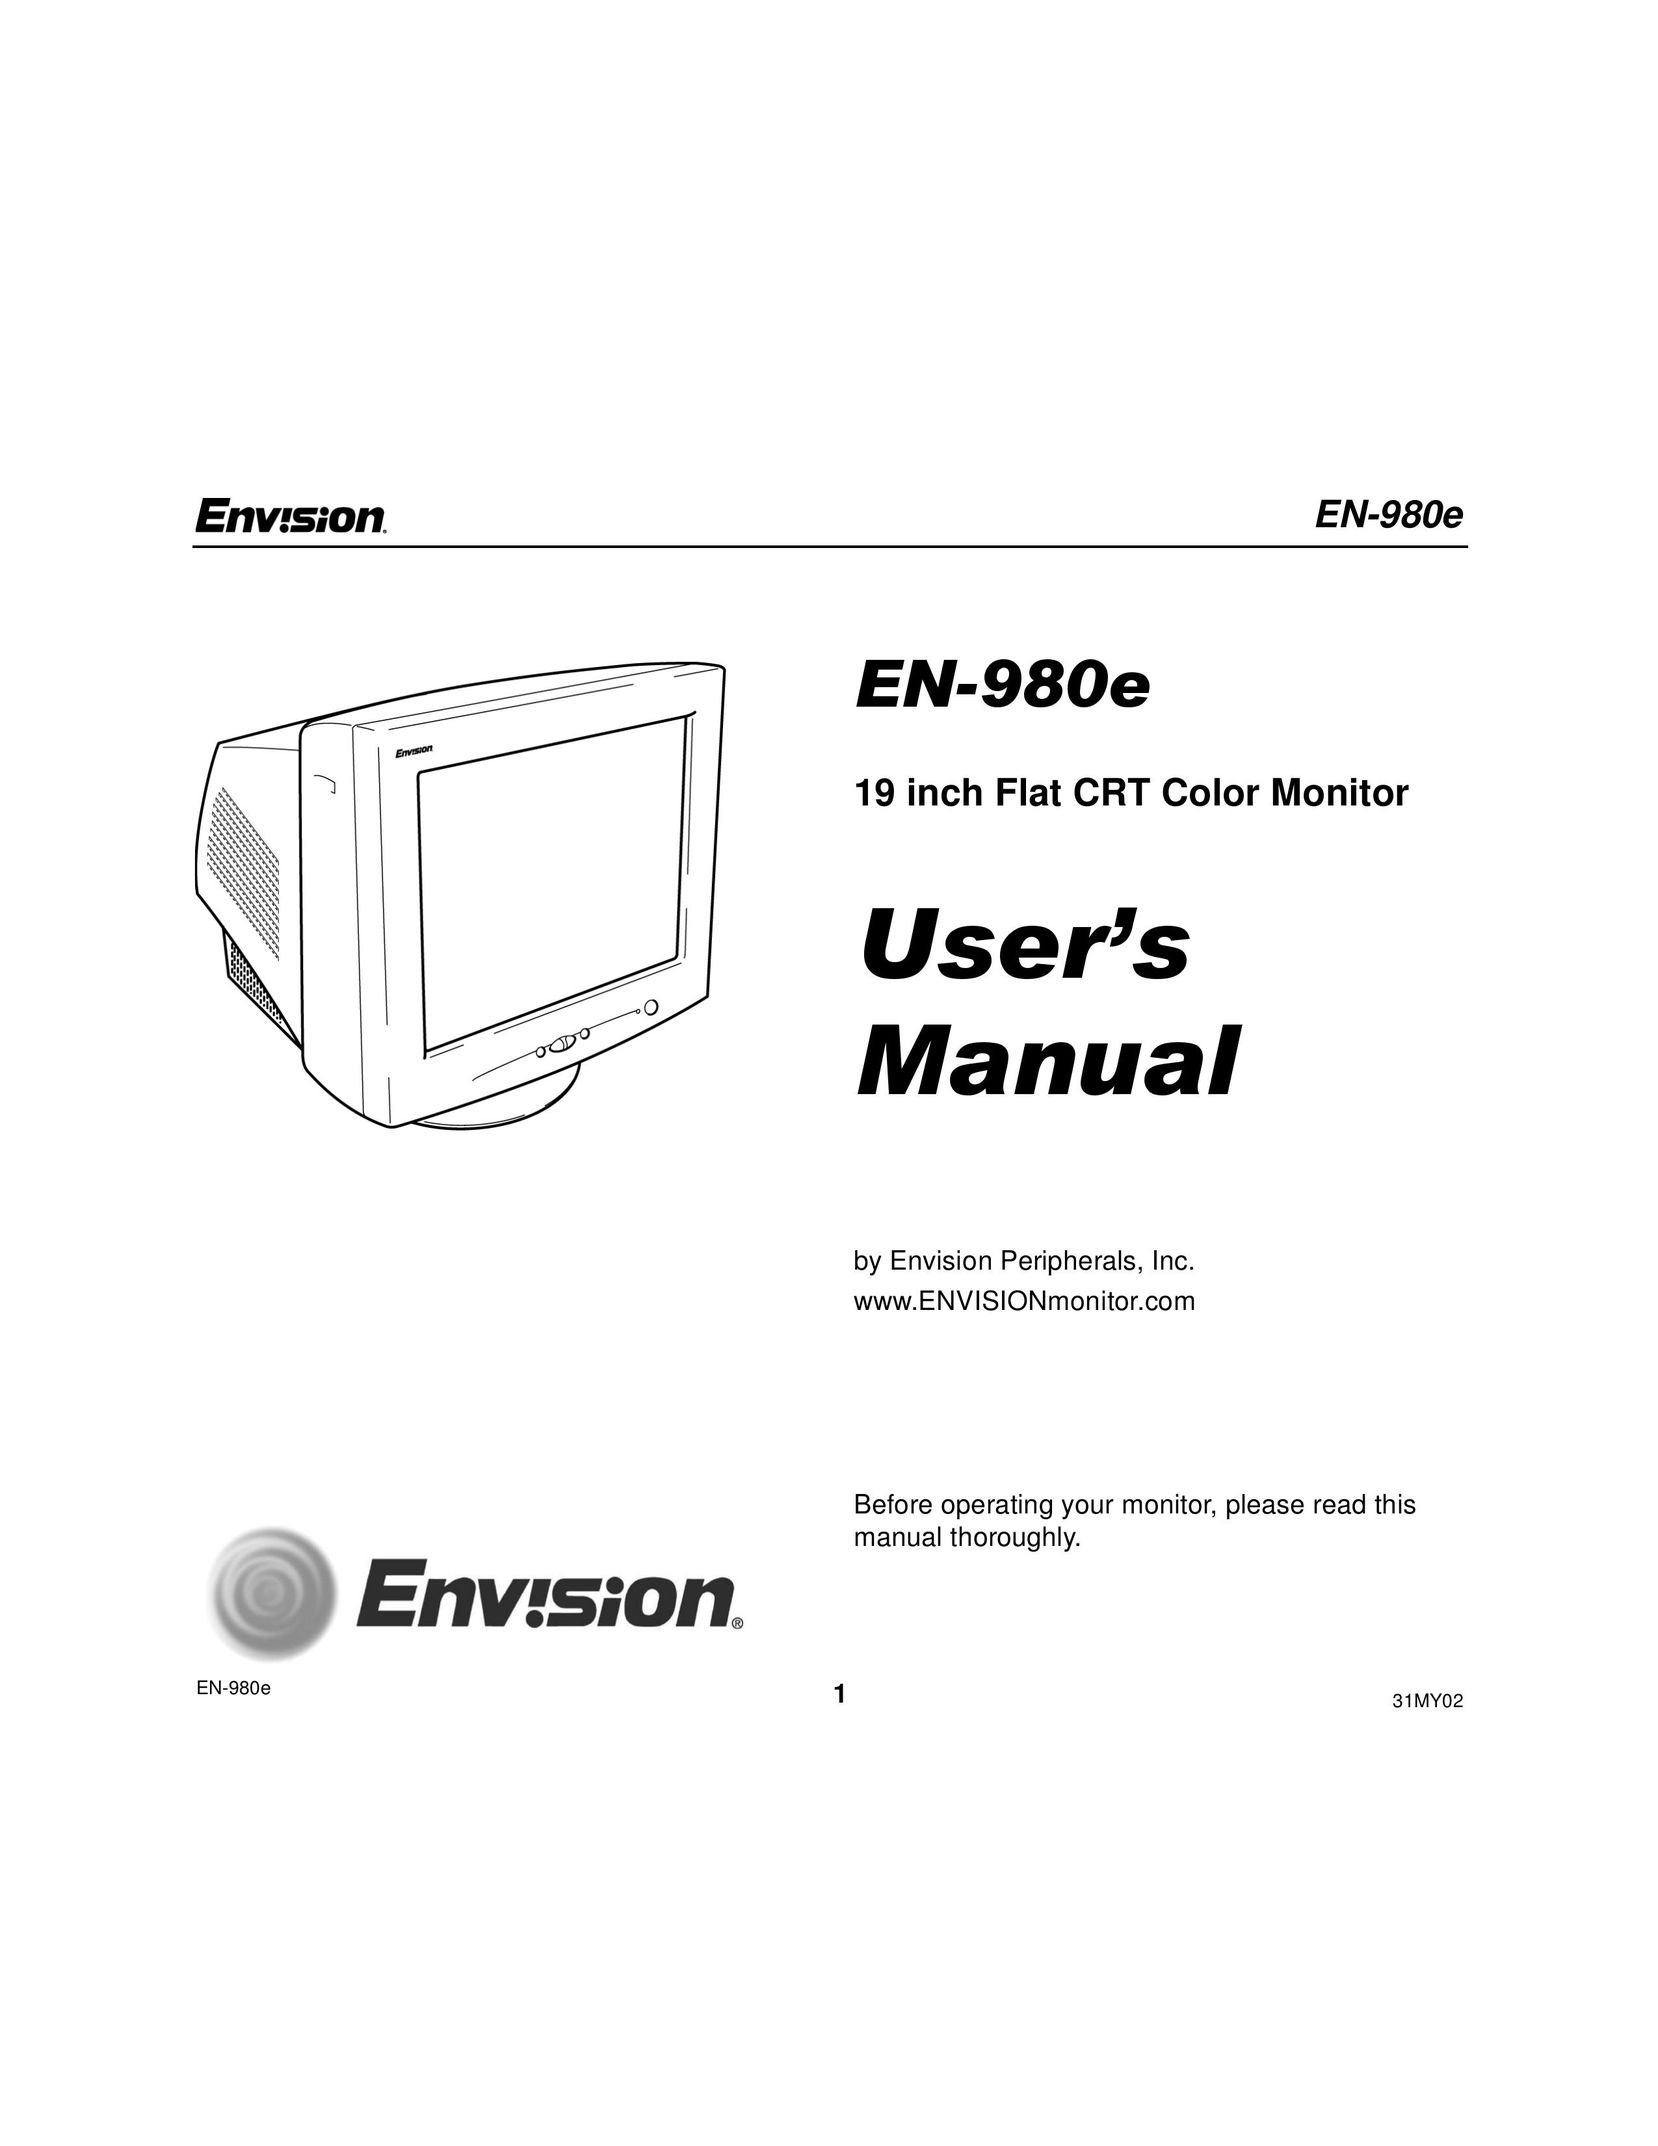 Envision Peripherals EN-980E Computer Monitor User Manual